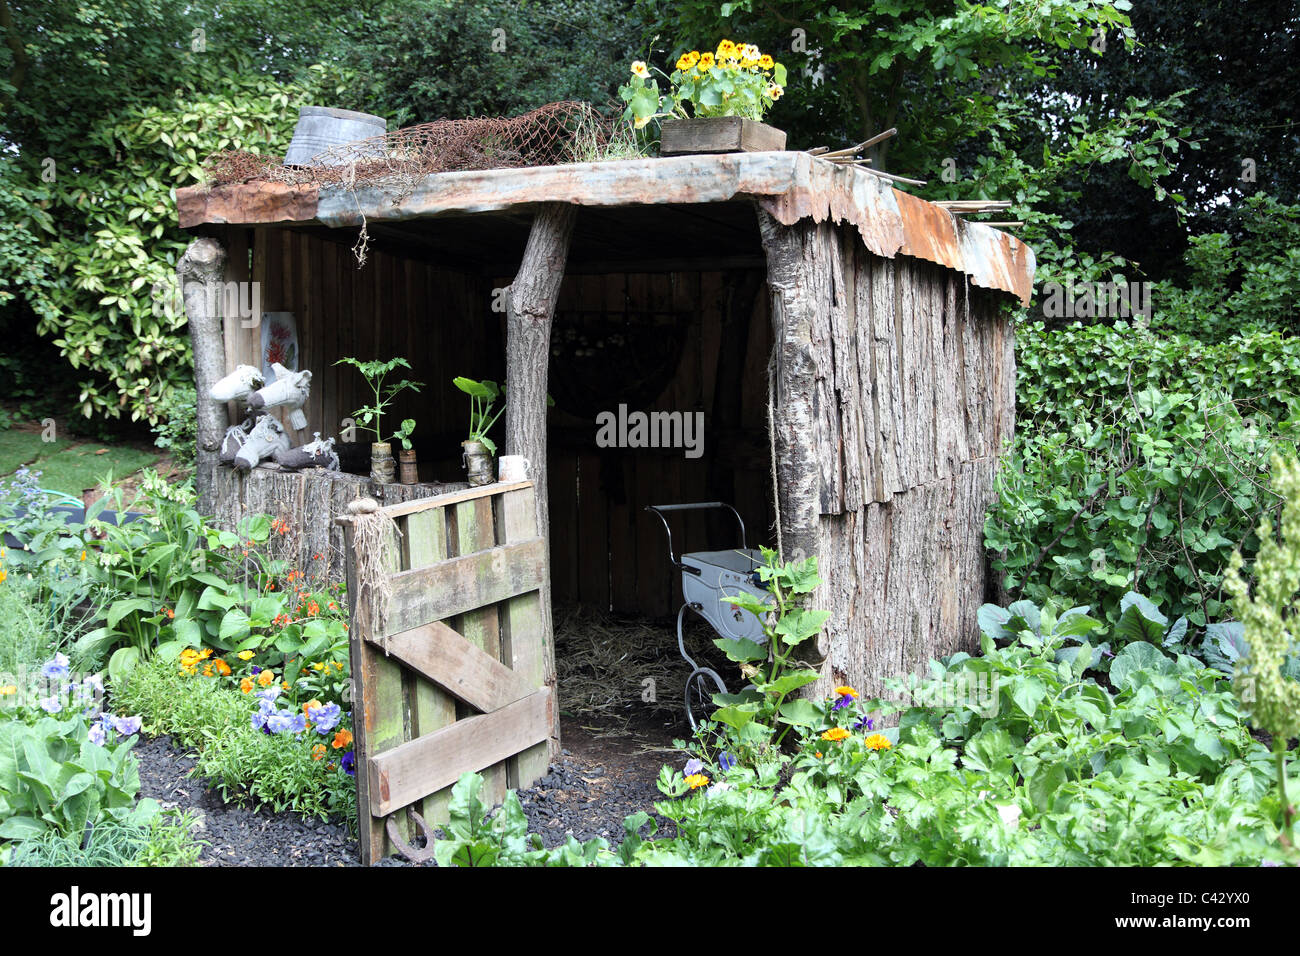 garden shed in a child's garden in wales, artisan garden, chelsea